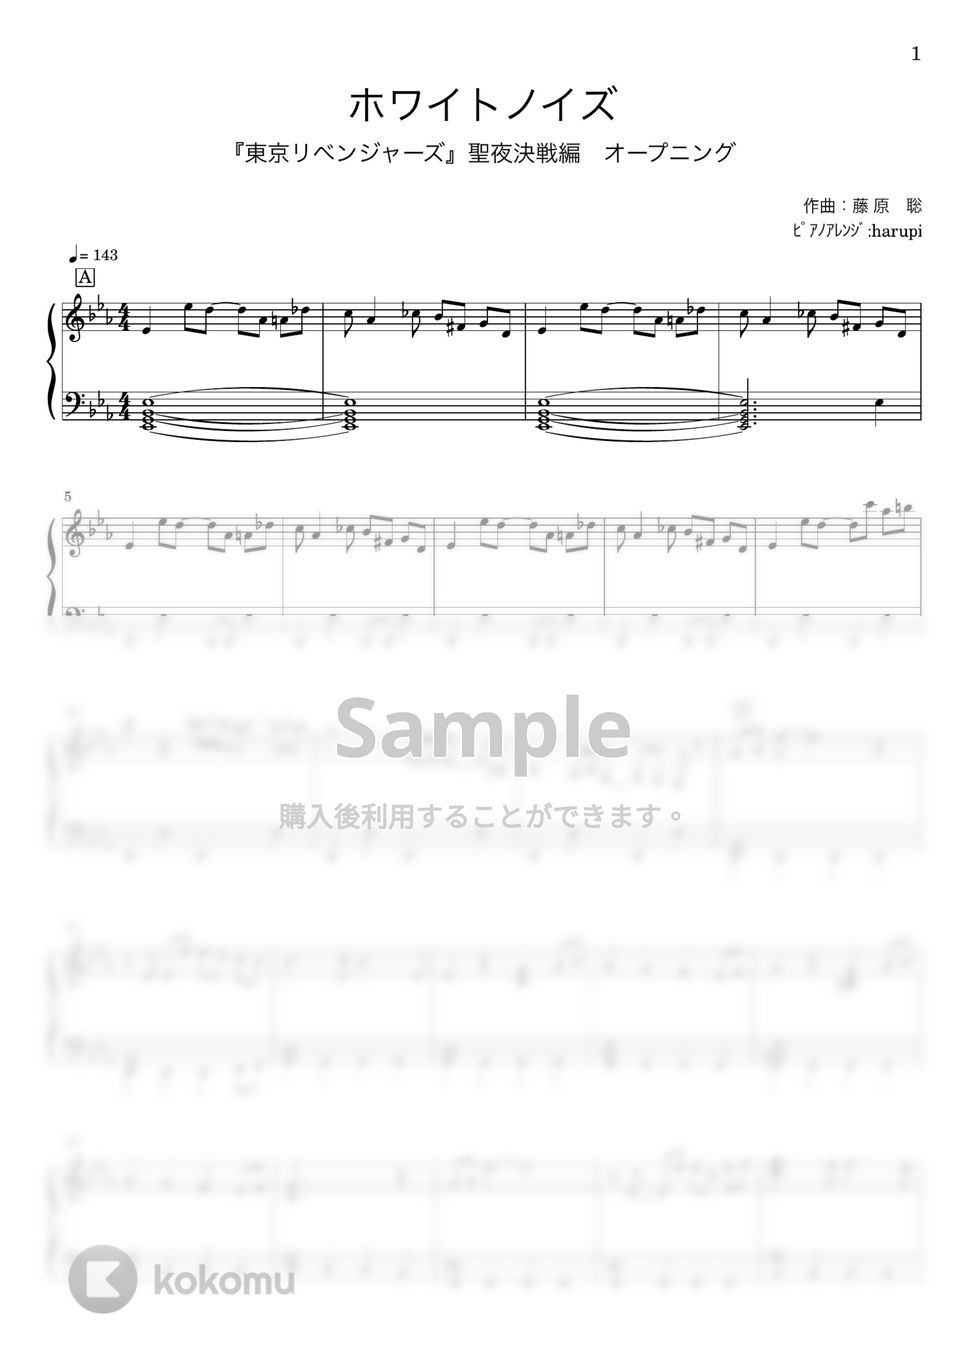 Official髭男dism - ホワイトノイズ (ピアノ/ソロ) by harupi